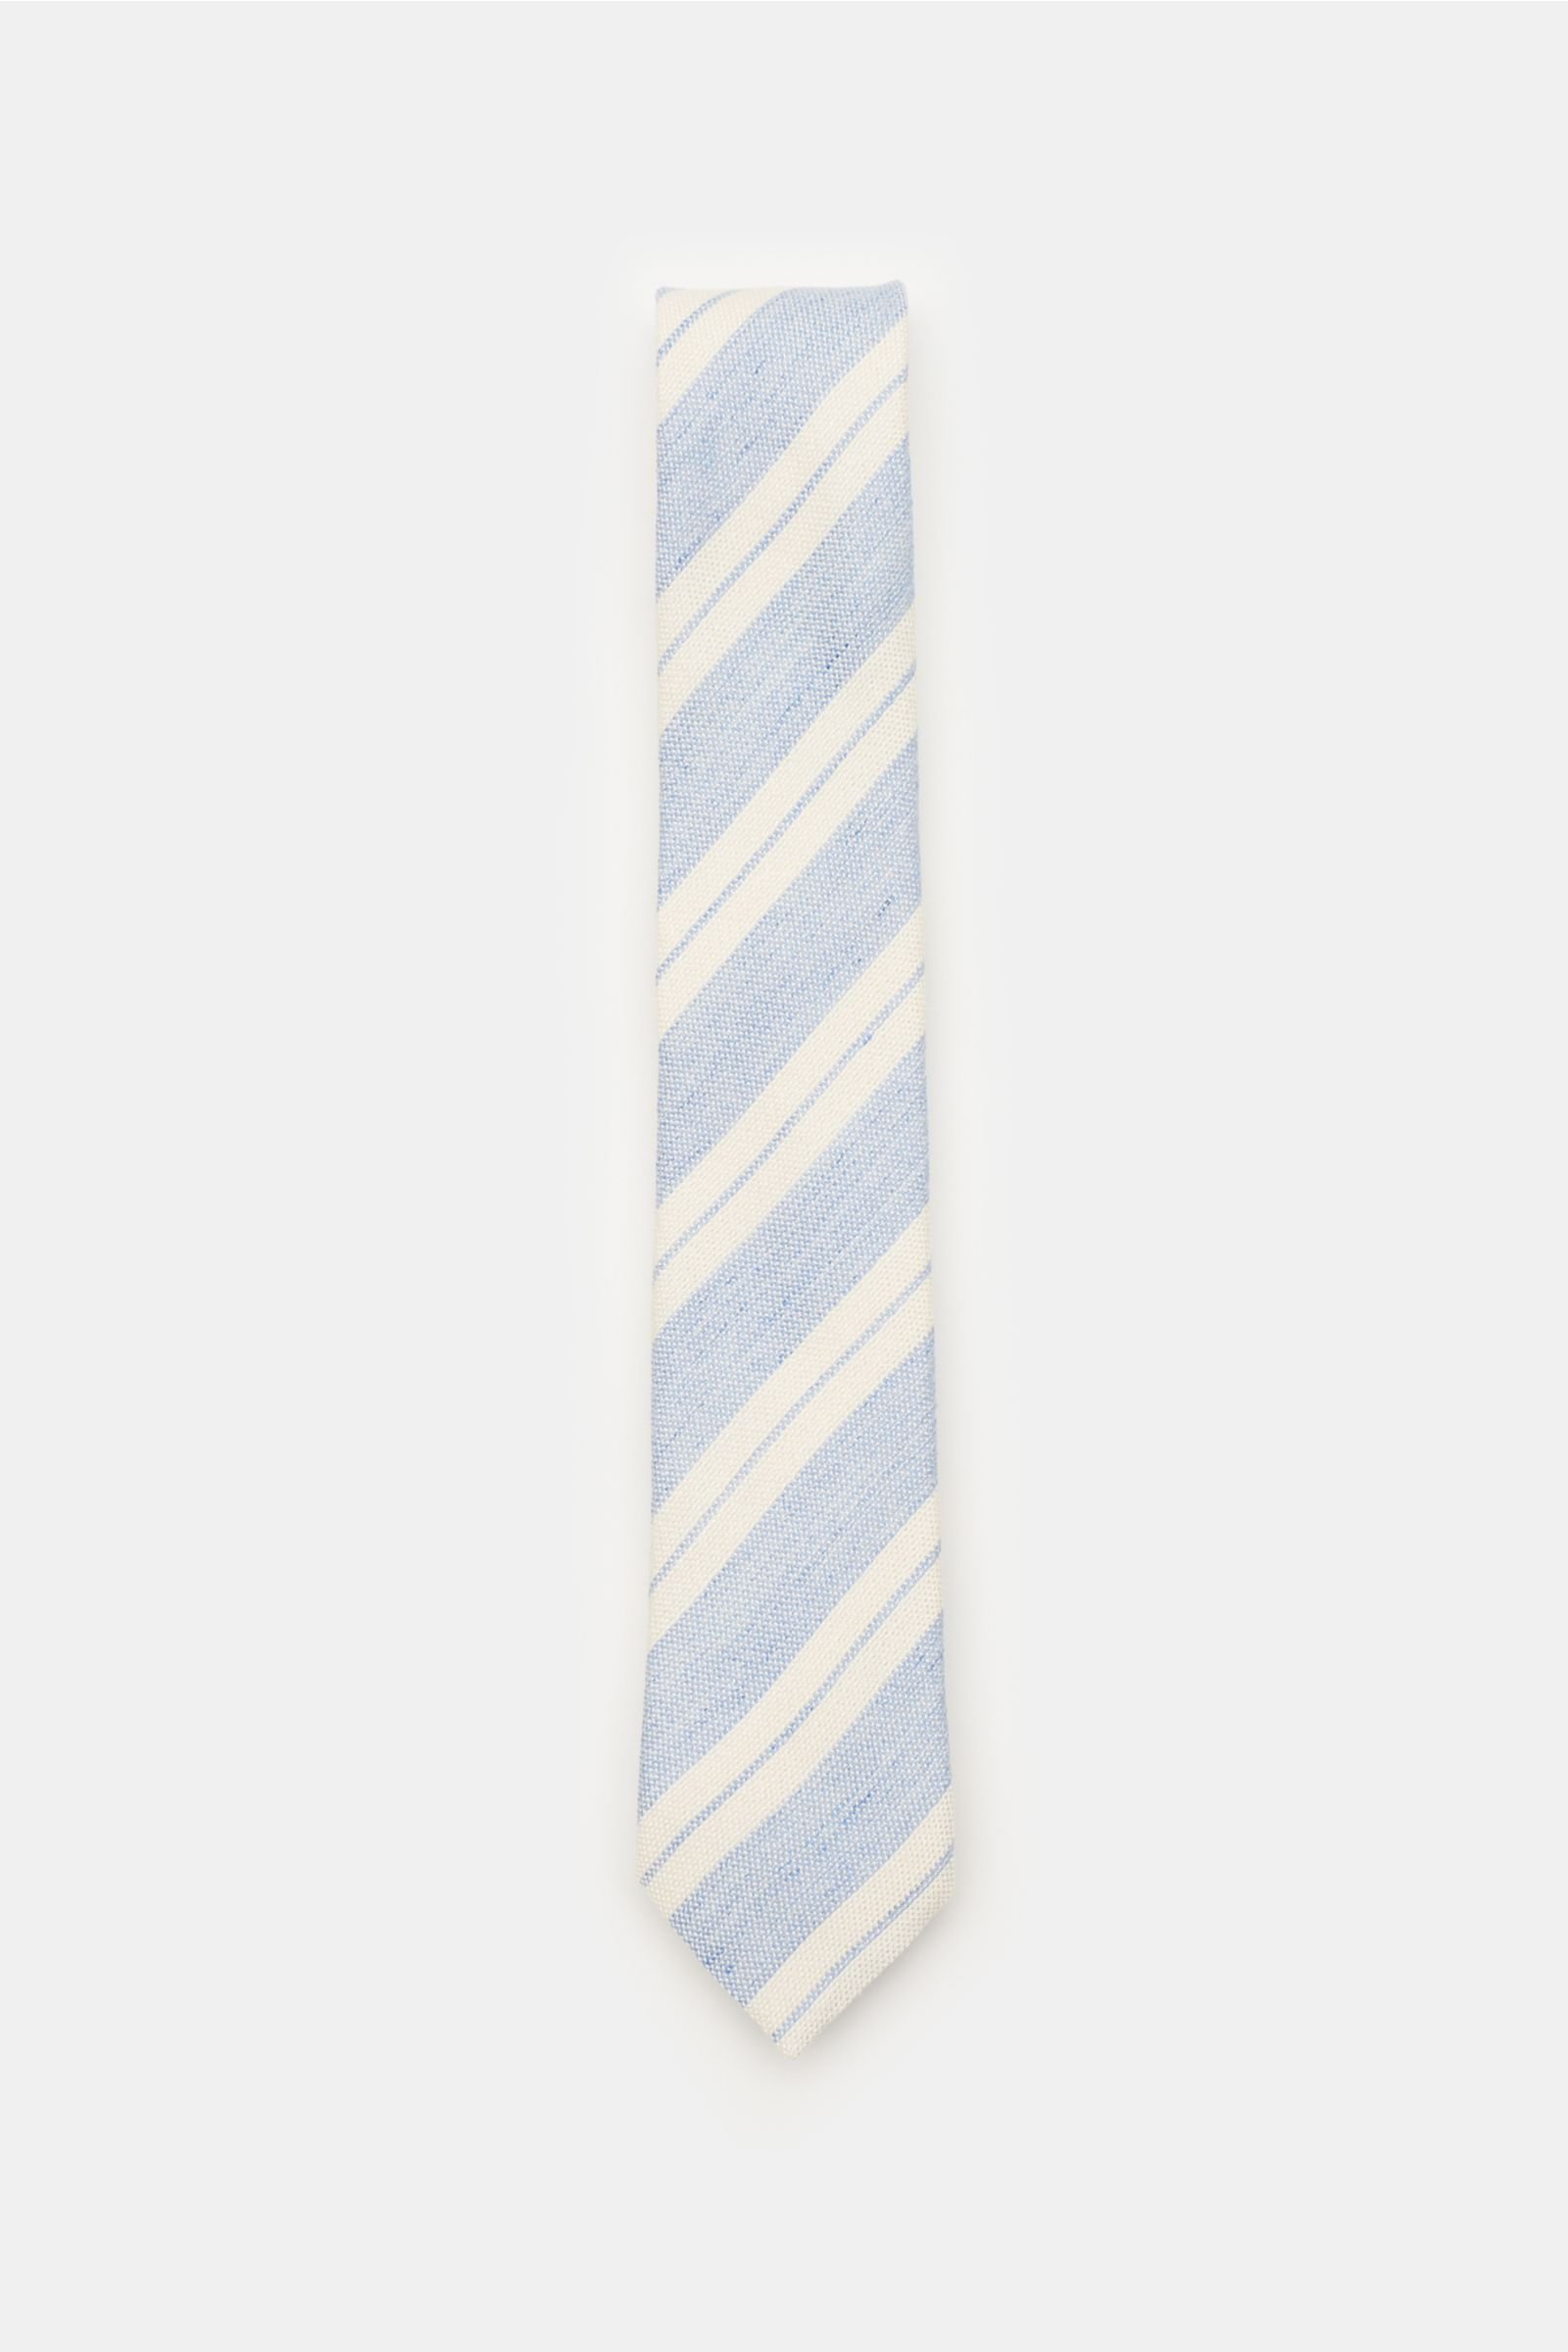 Tie light blue/cream striped